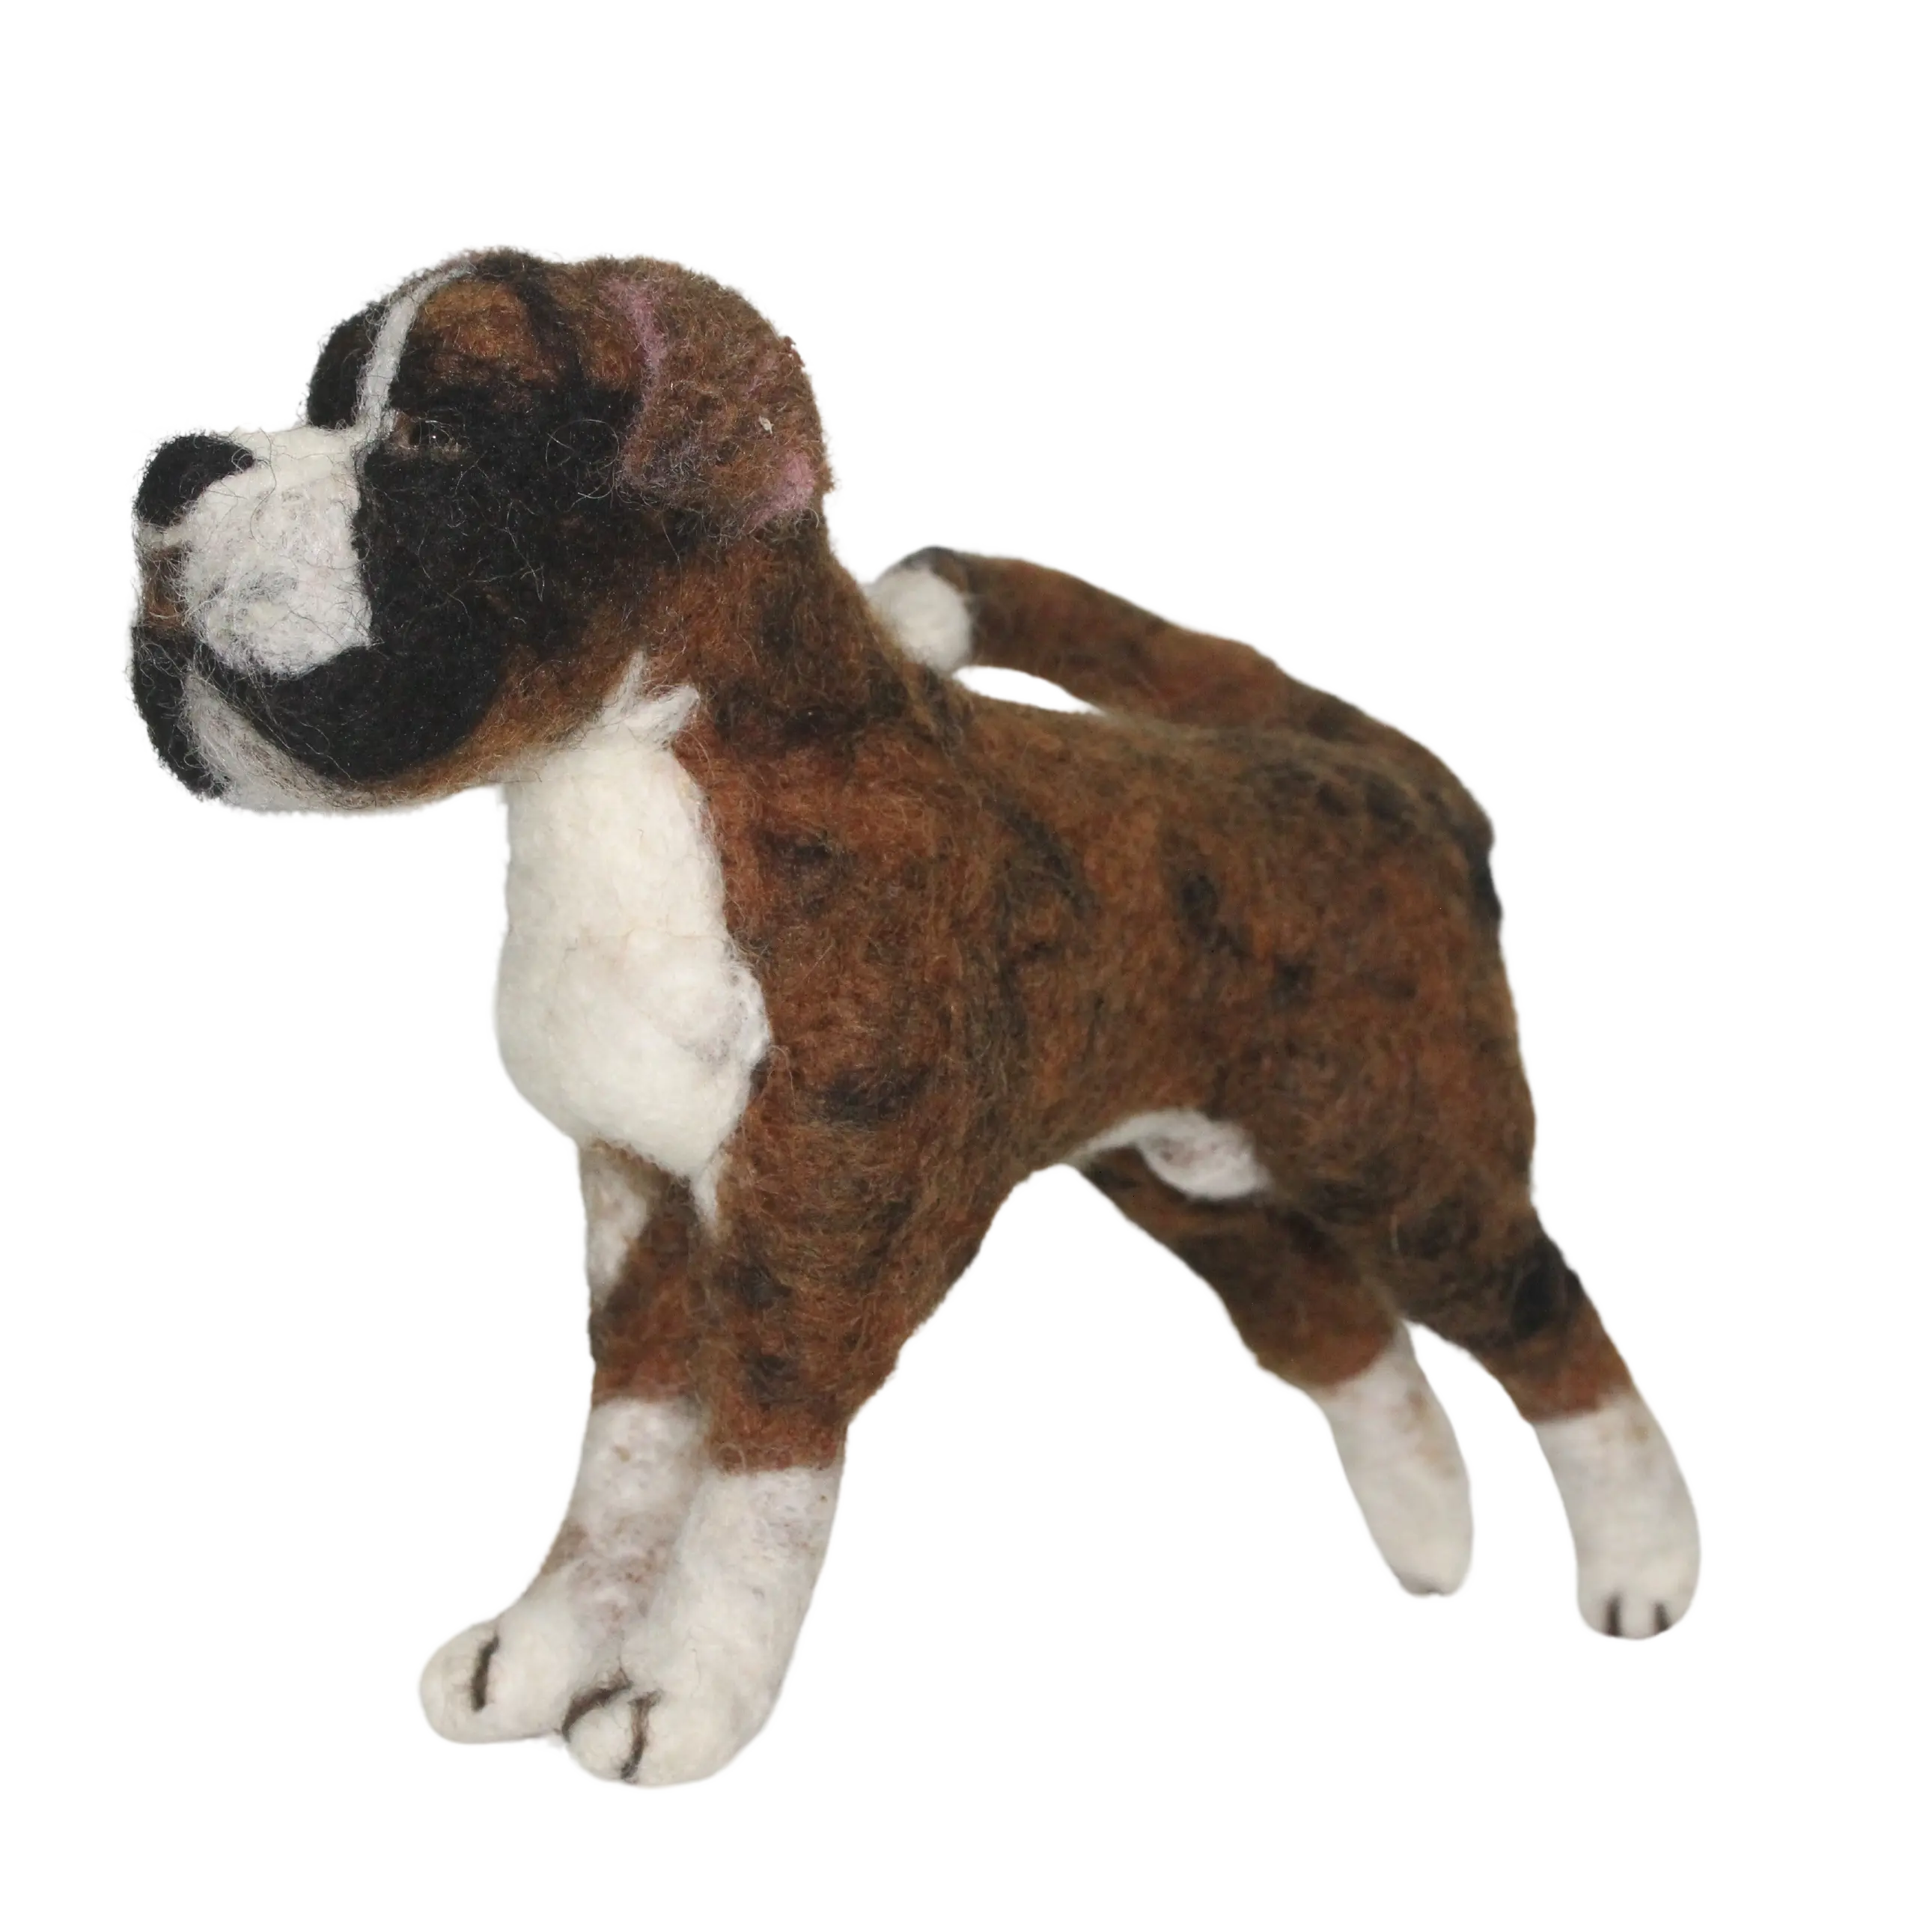 Adorable Felt Stuffed Boxer Dog Toy: Soft Plush Companion for Your Furry Friend